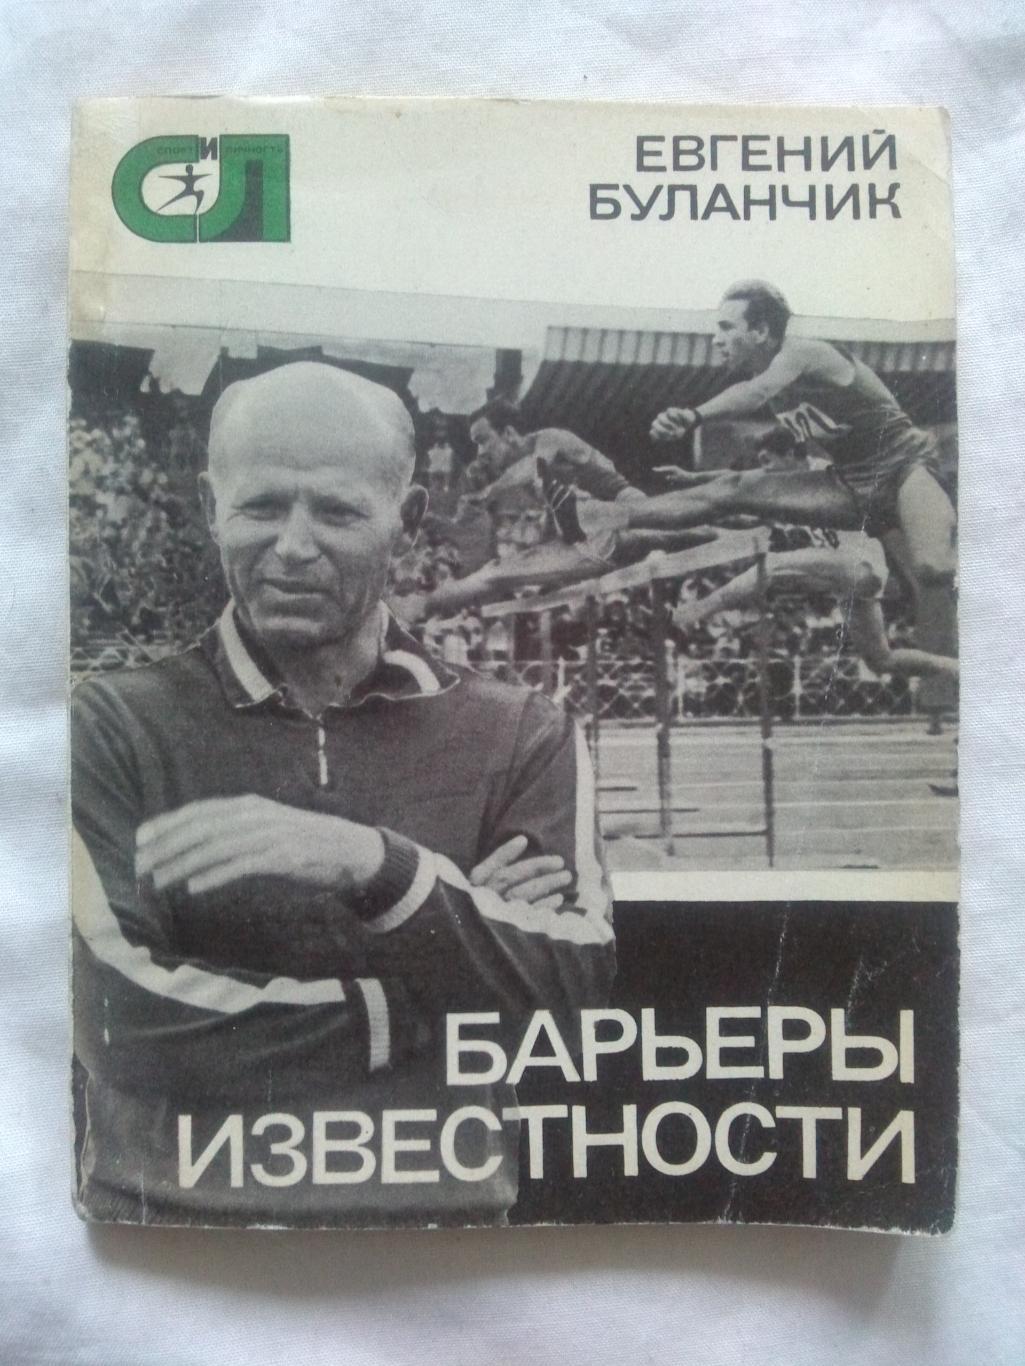 Евгений Буланчик -Барьеры известности1976 г. ( Легкая атлетика , спорт )